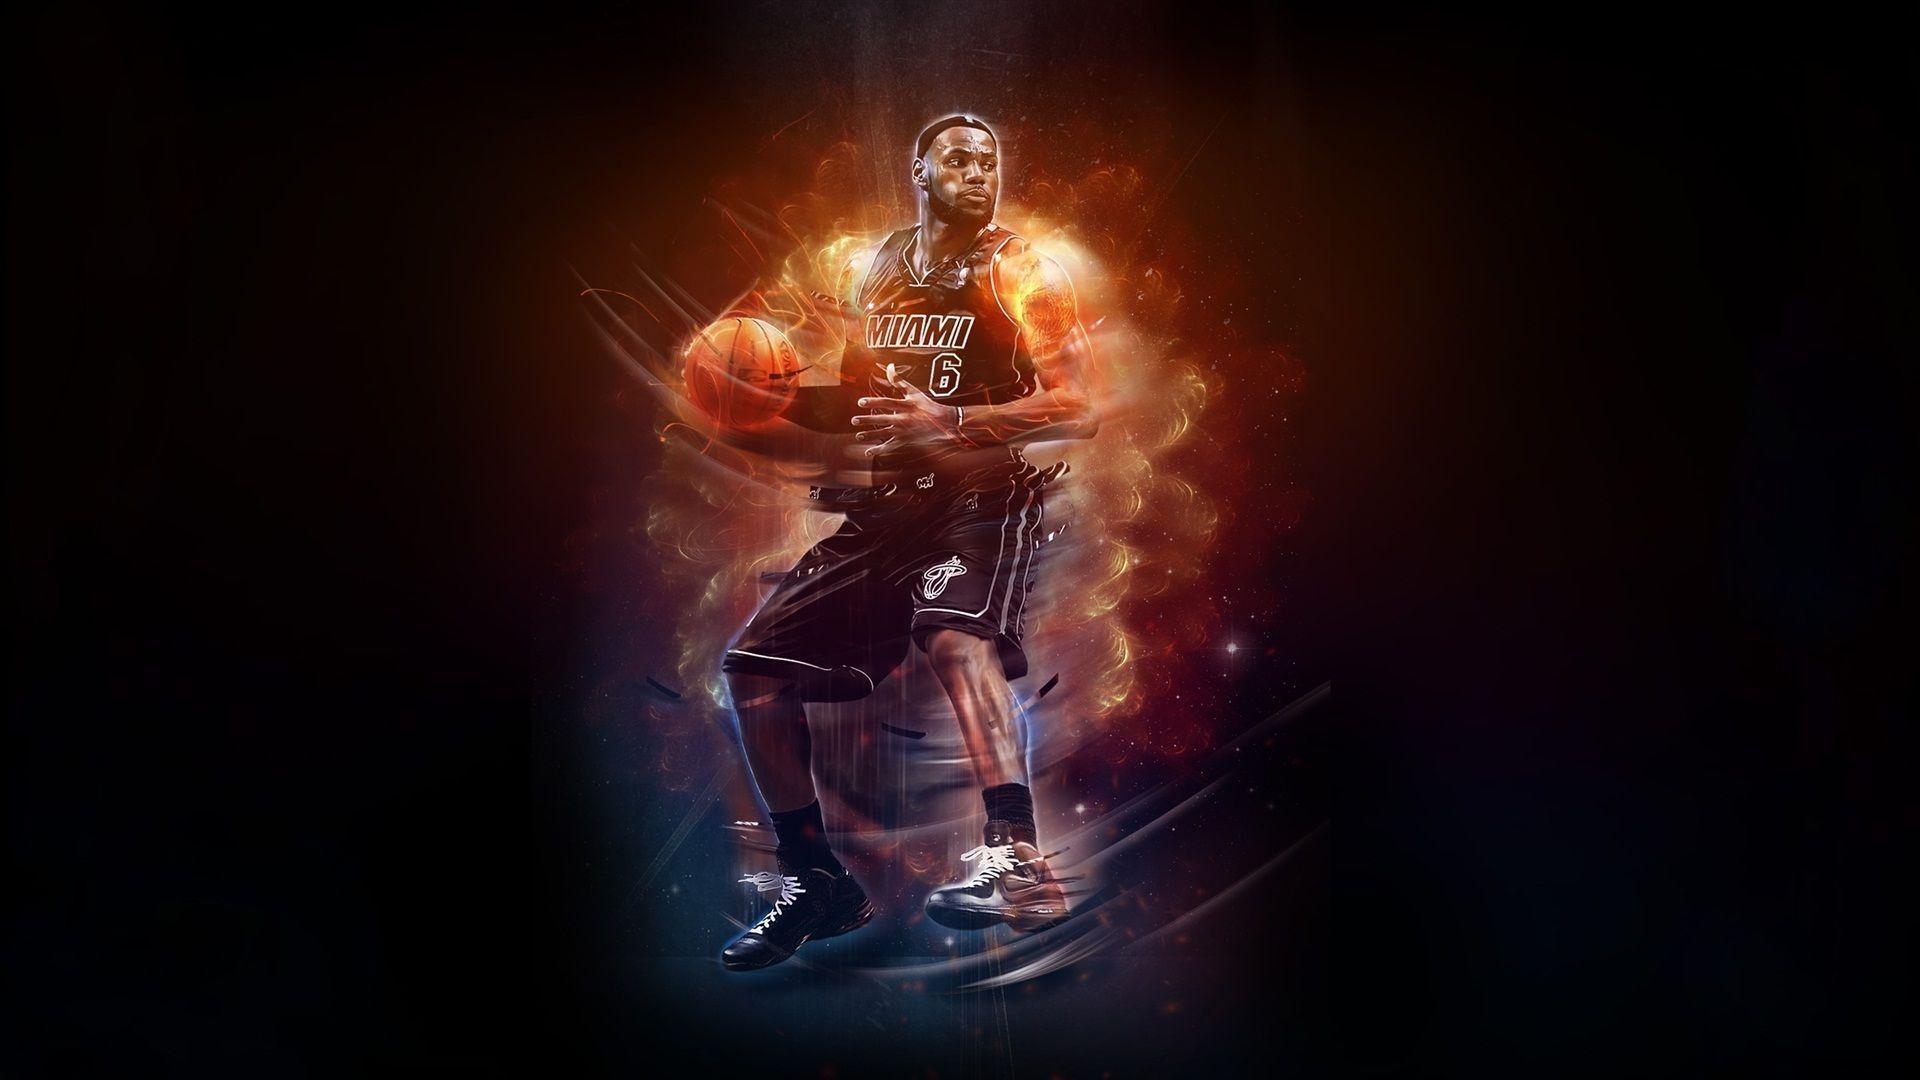 Cool LeBron James Miami Heat HD Wallpaper. TanukinoSippo